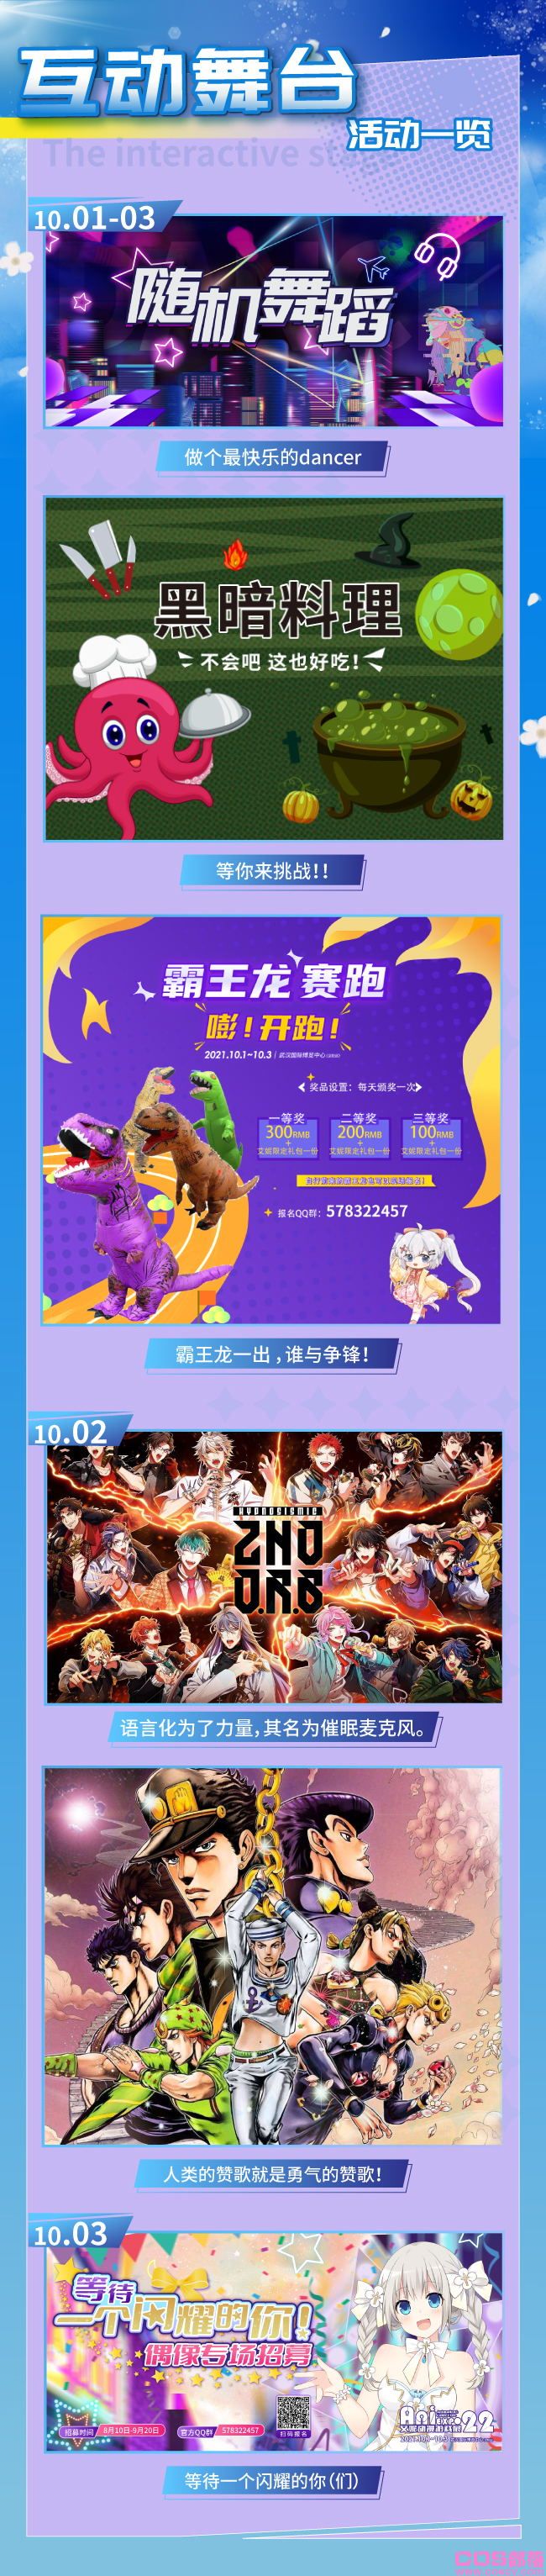 2021 ANI-EXPO 武汉艾妮超强总宣来袭！十一国庆，嗨在武汉第二十二届艾妮动漫游戏展(图4)